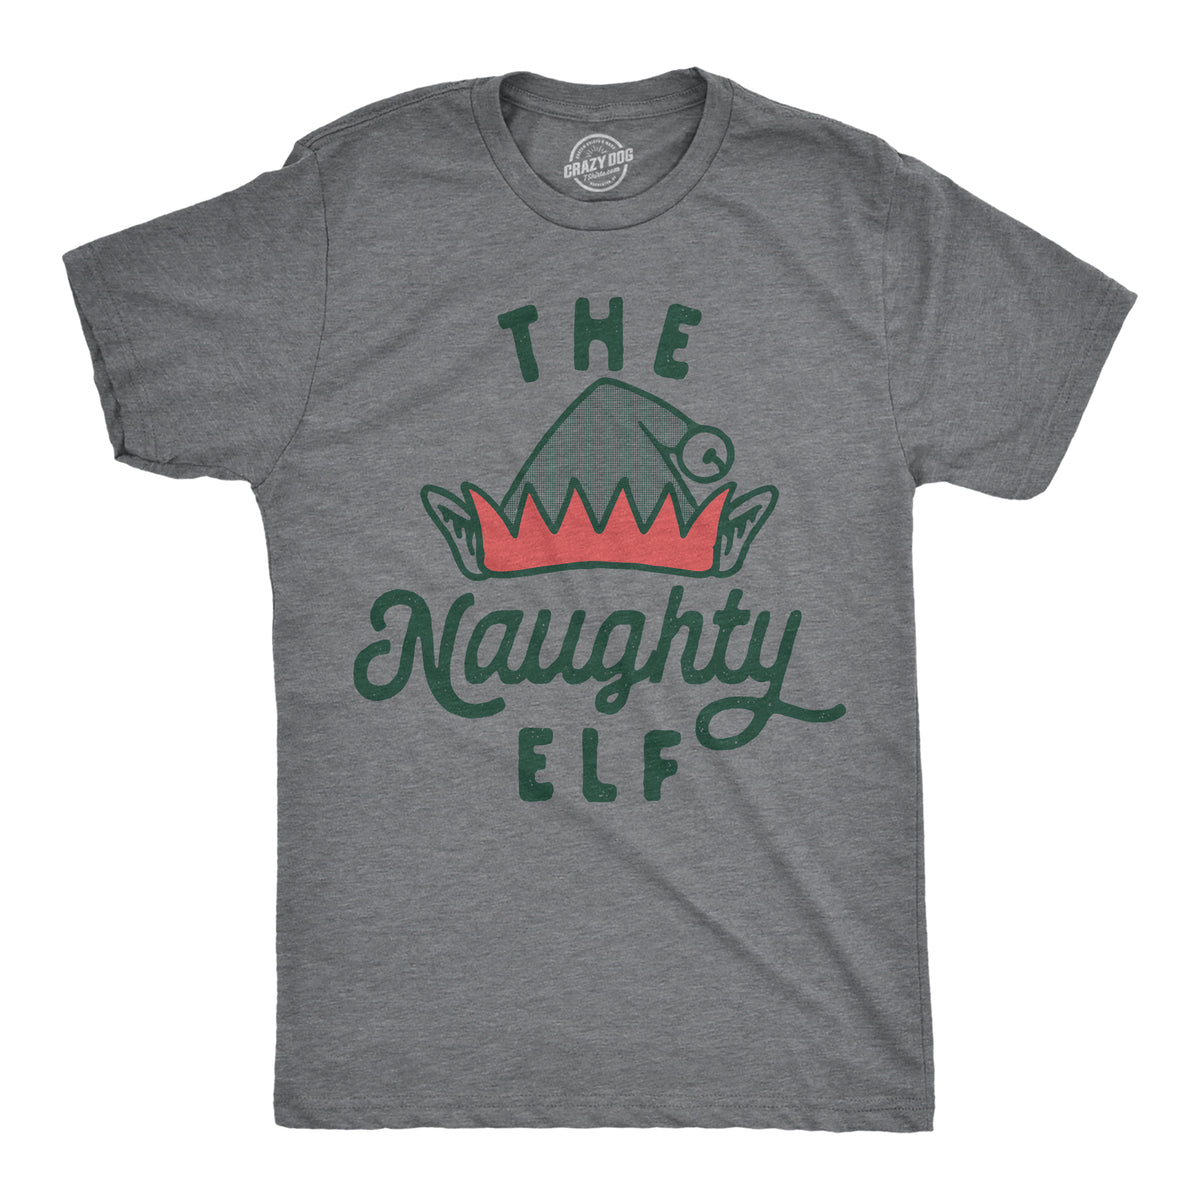 Funny Dark Heather Grey - NAUGHTY The Naughty Elf Mens T Shirt Nerdy Christmas sarcastic Tee